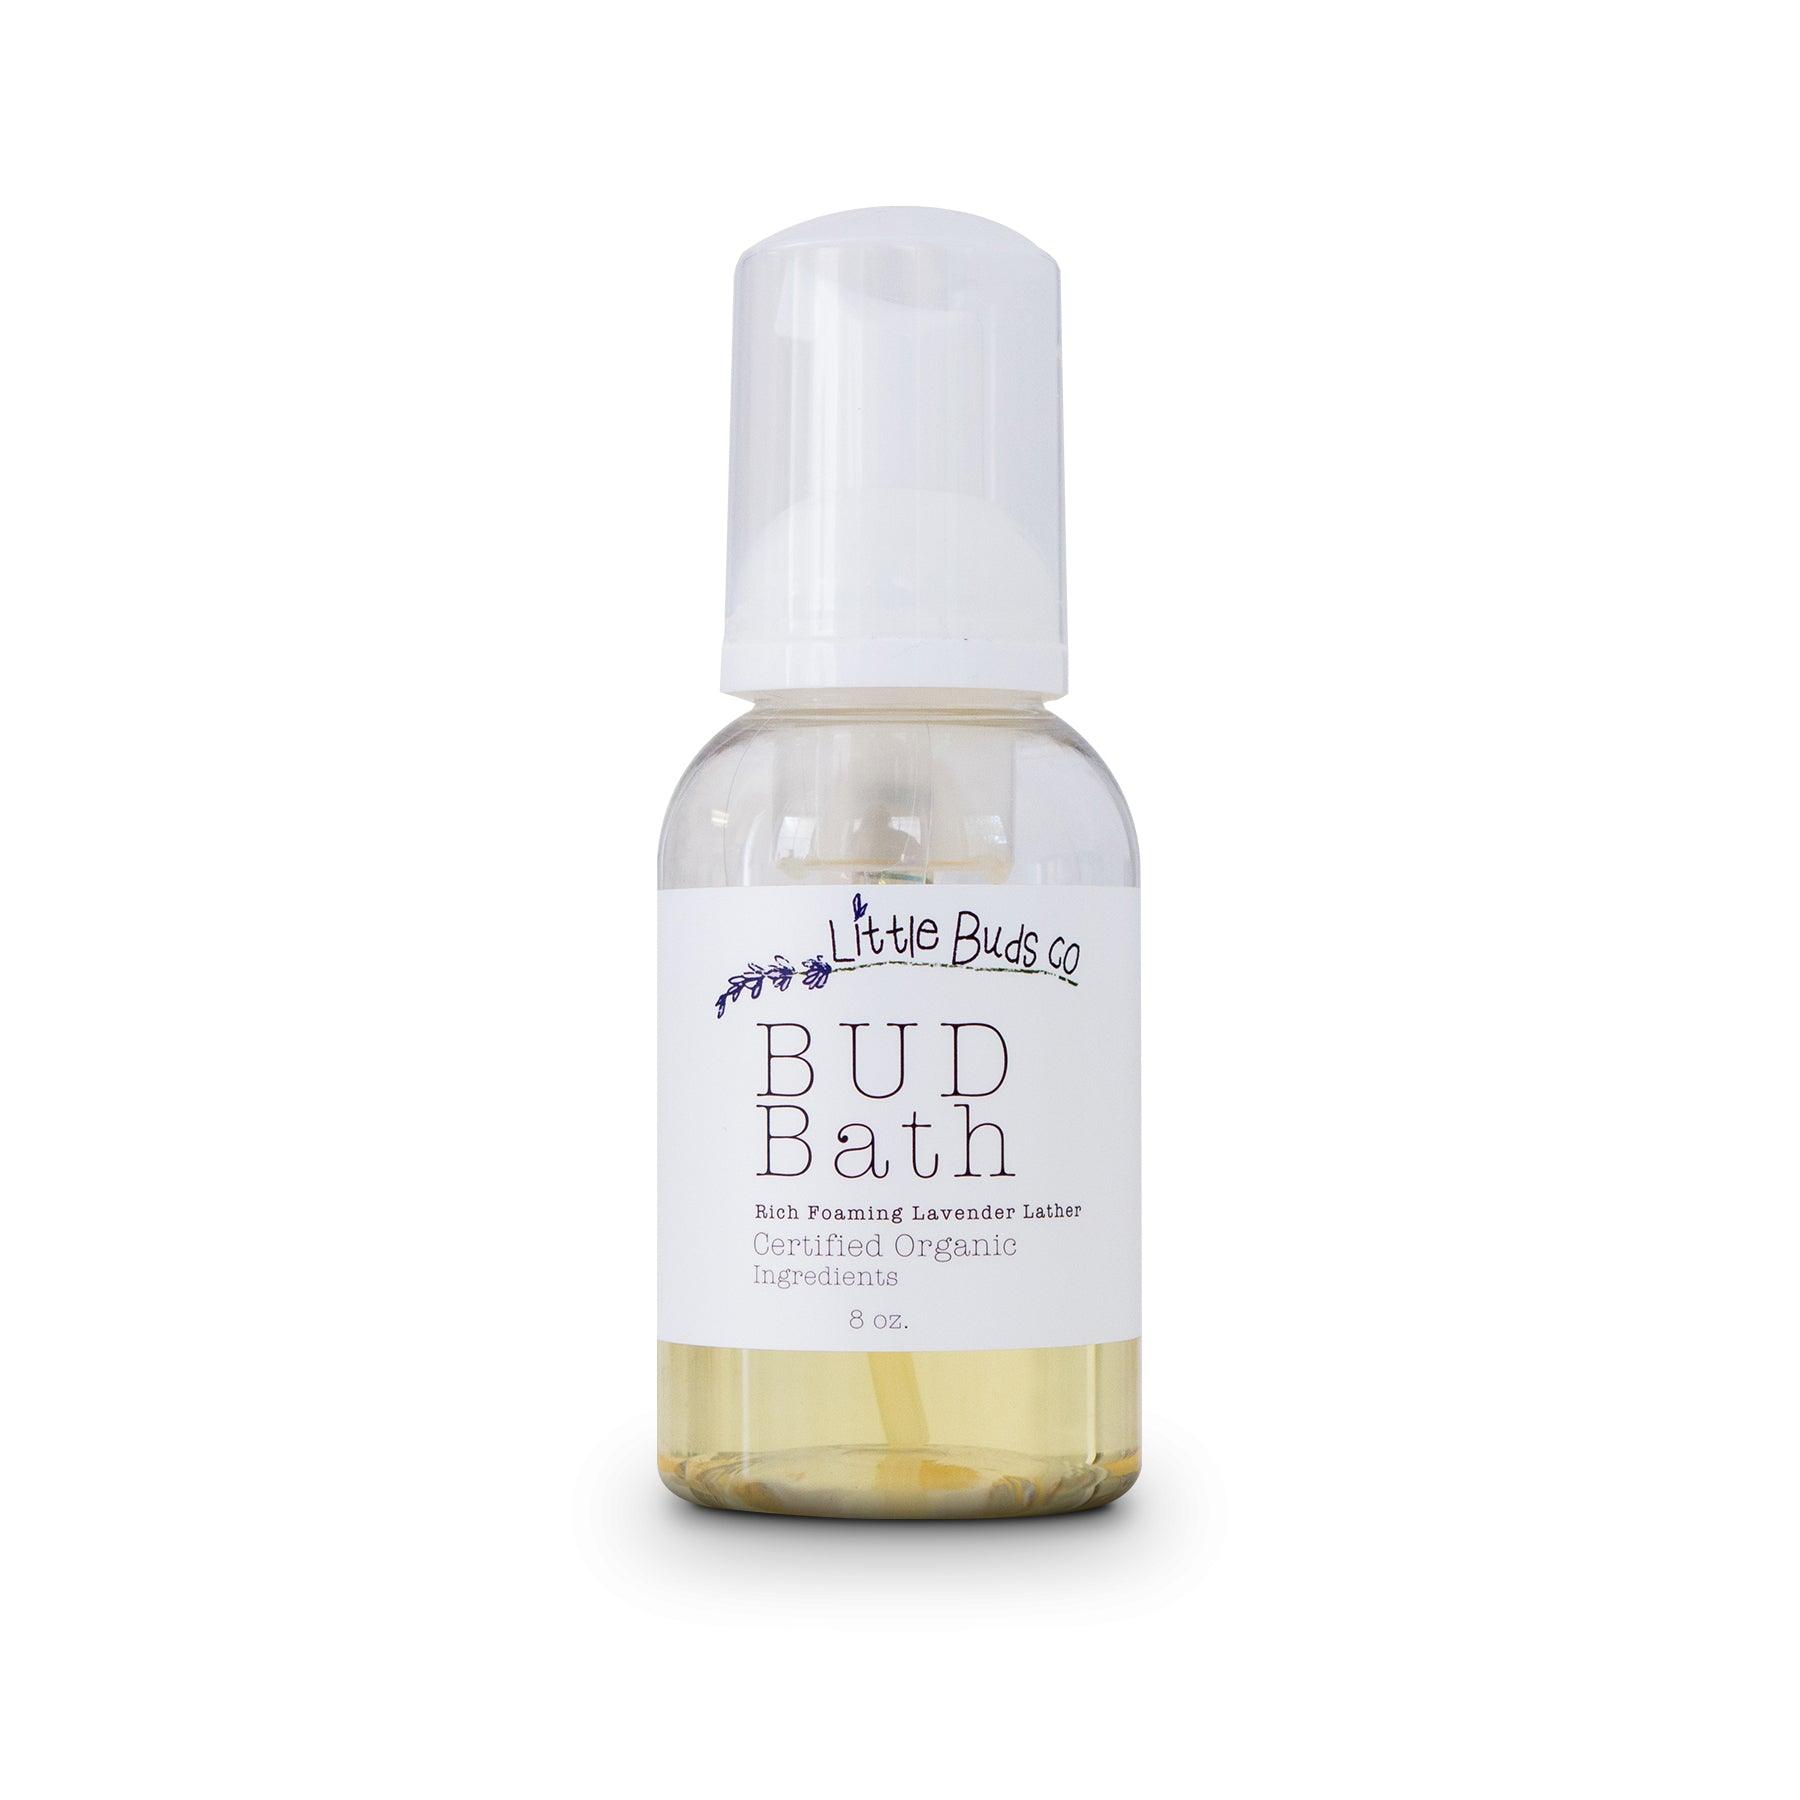 Bud Bath for Babies - Organic Foaming Lavender Cleanser - 8 oz - Lavender Life Company